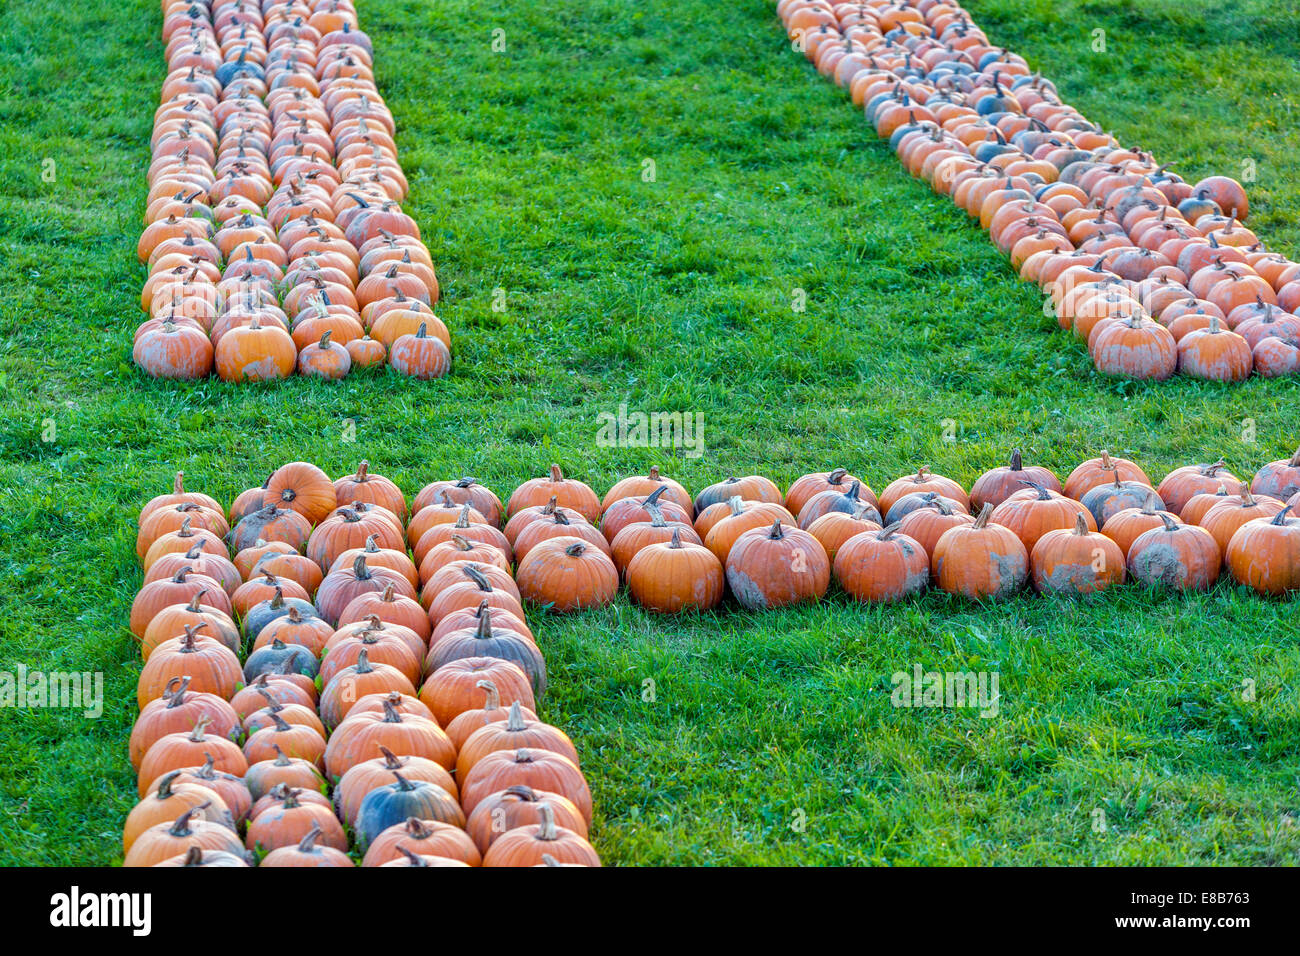 Pumpkin farm, pumpkins stacked, pattern Stock Photo